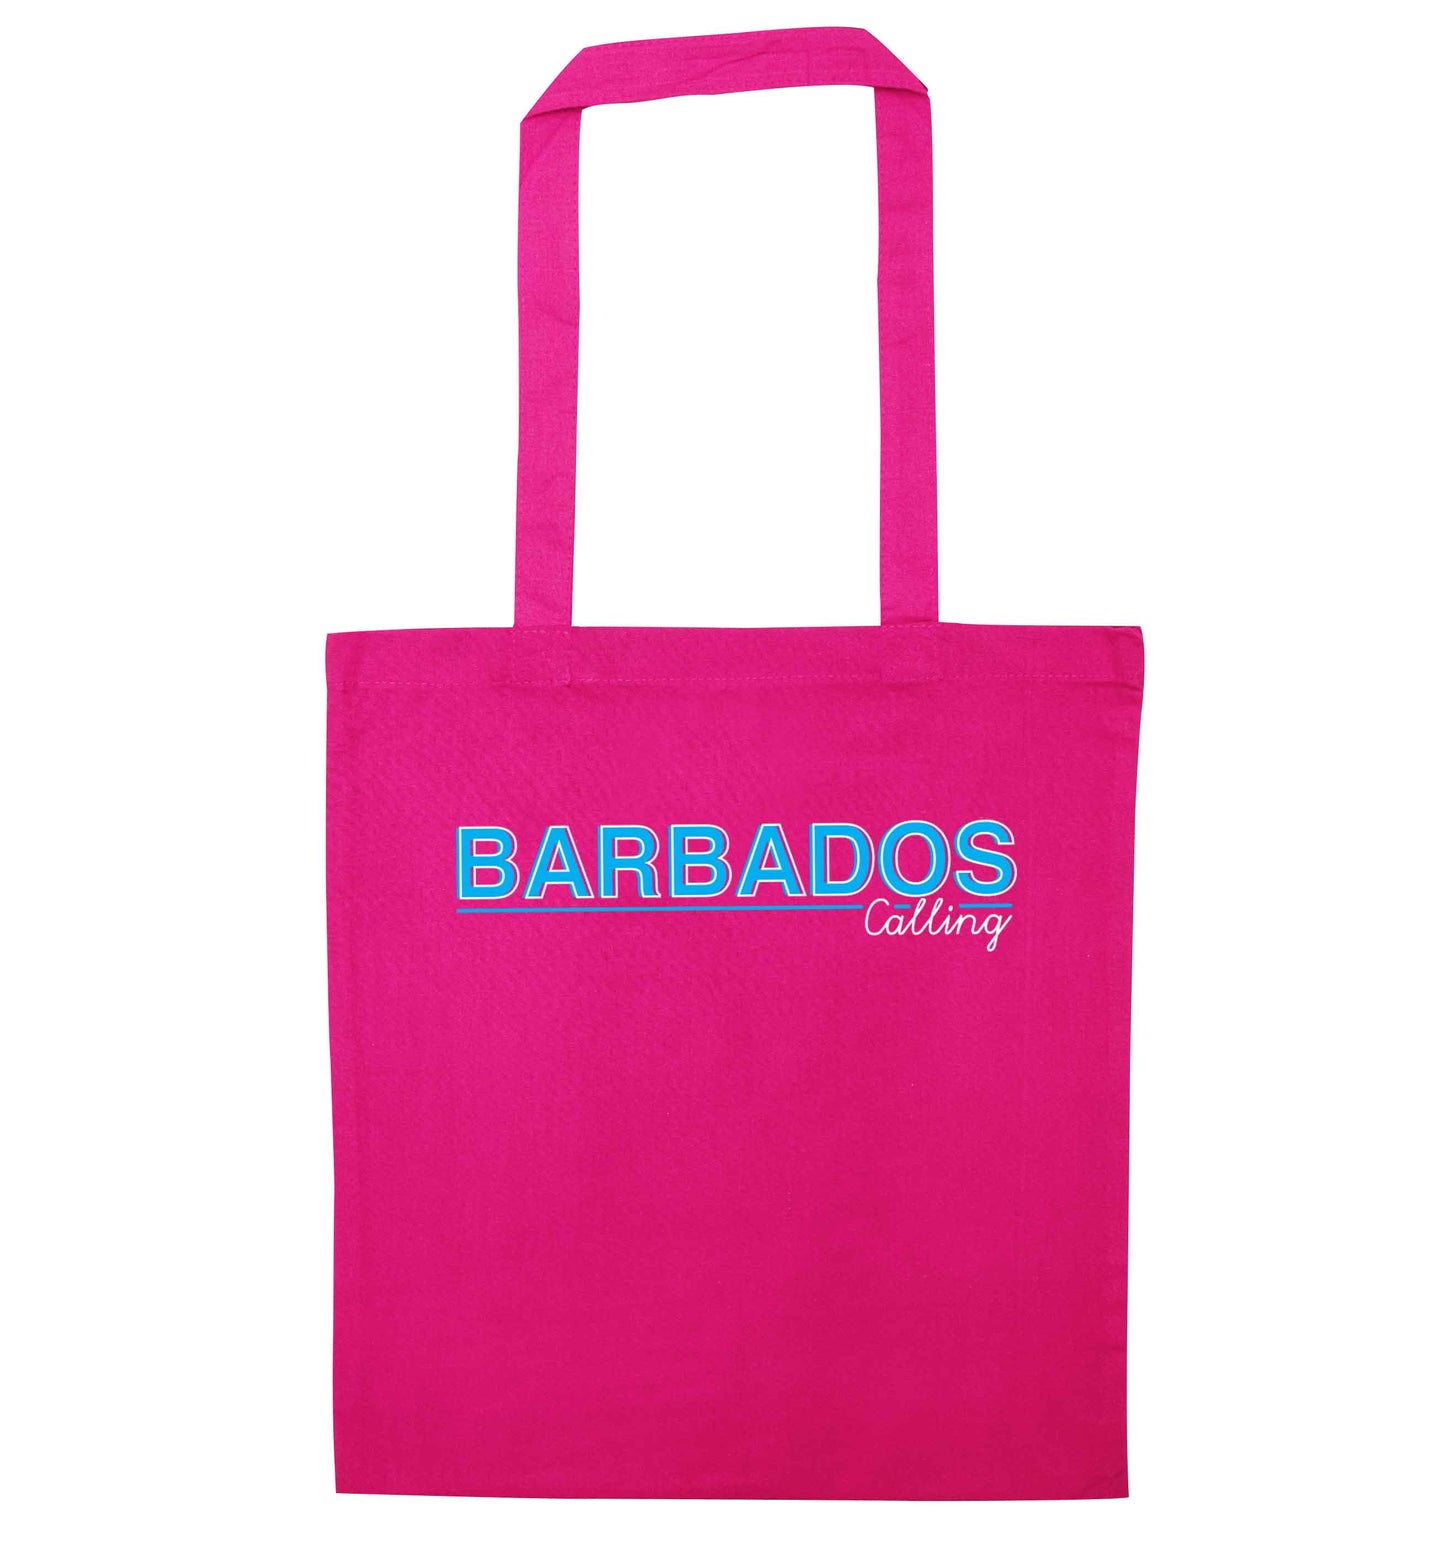 Barbados calling pink tote bag